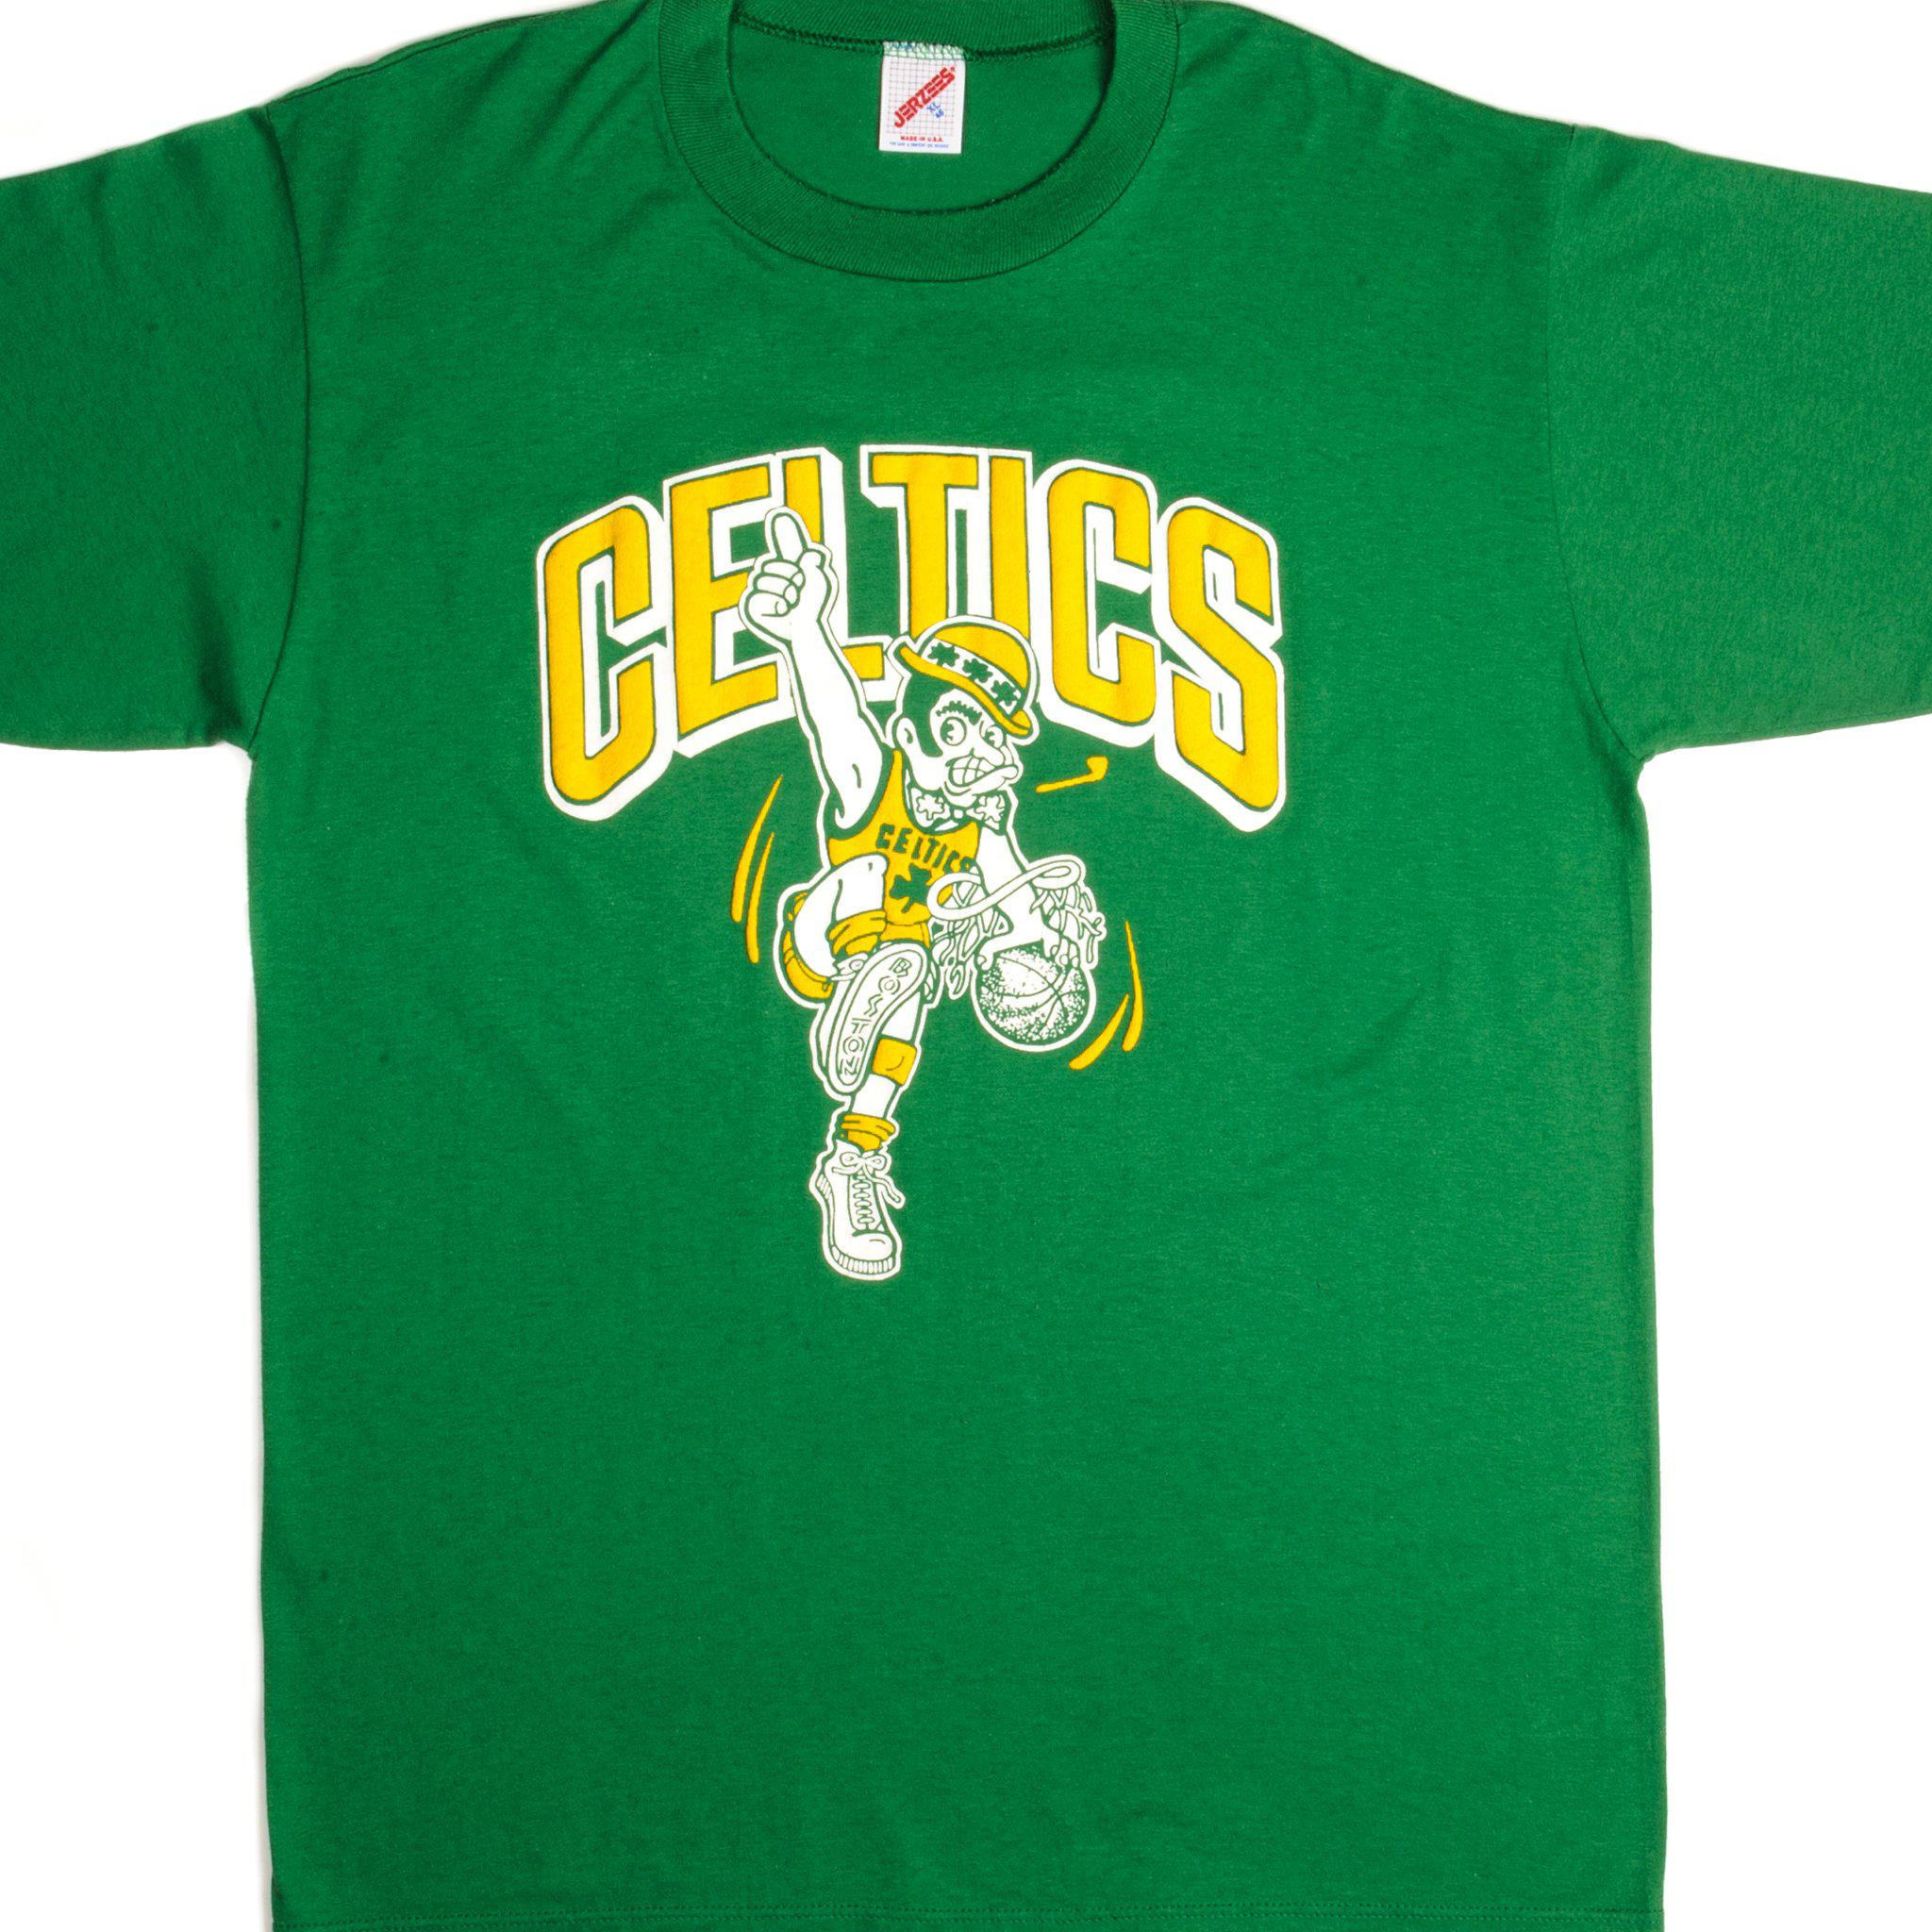 Boston celtics vintage shirt